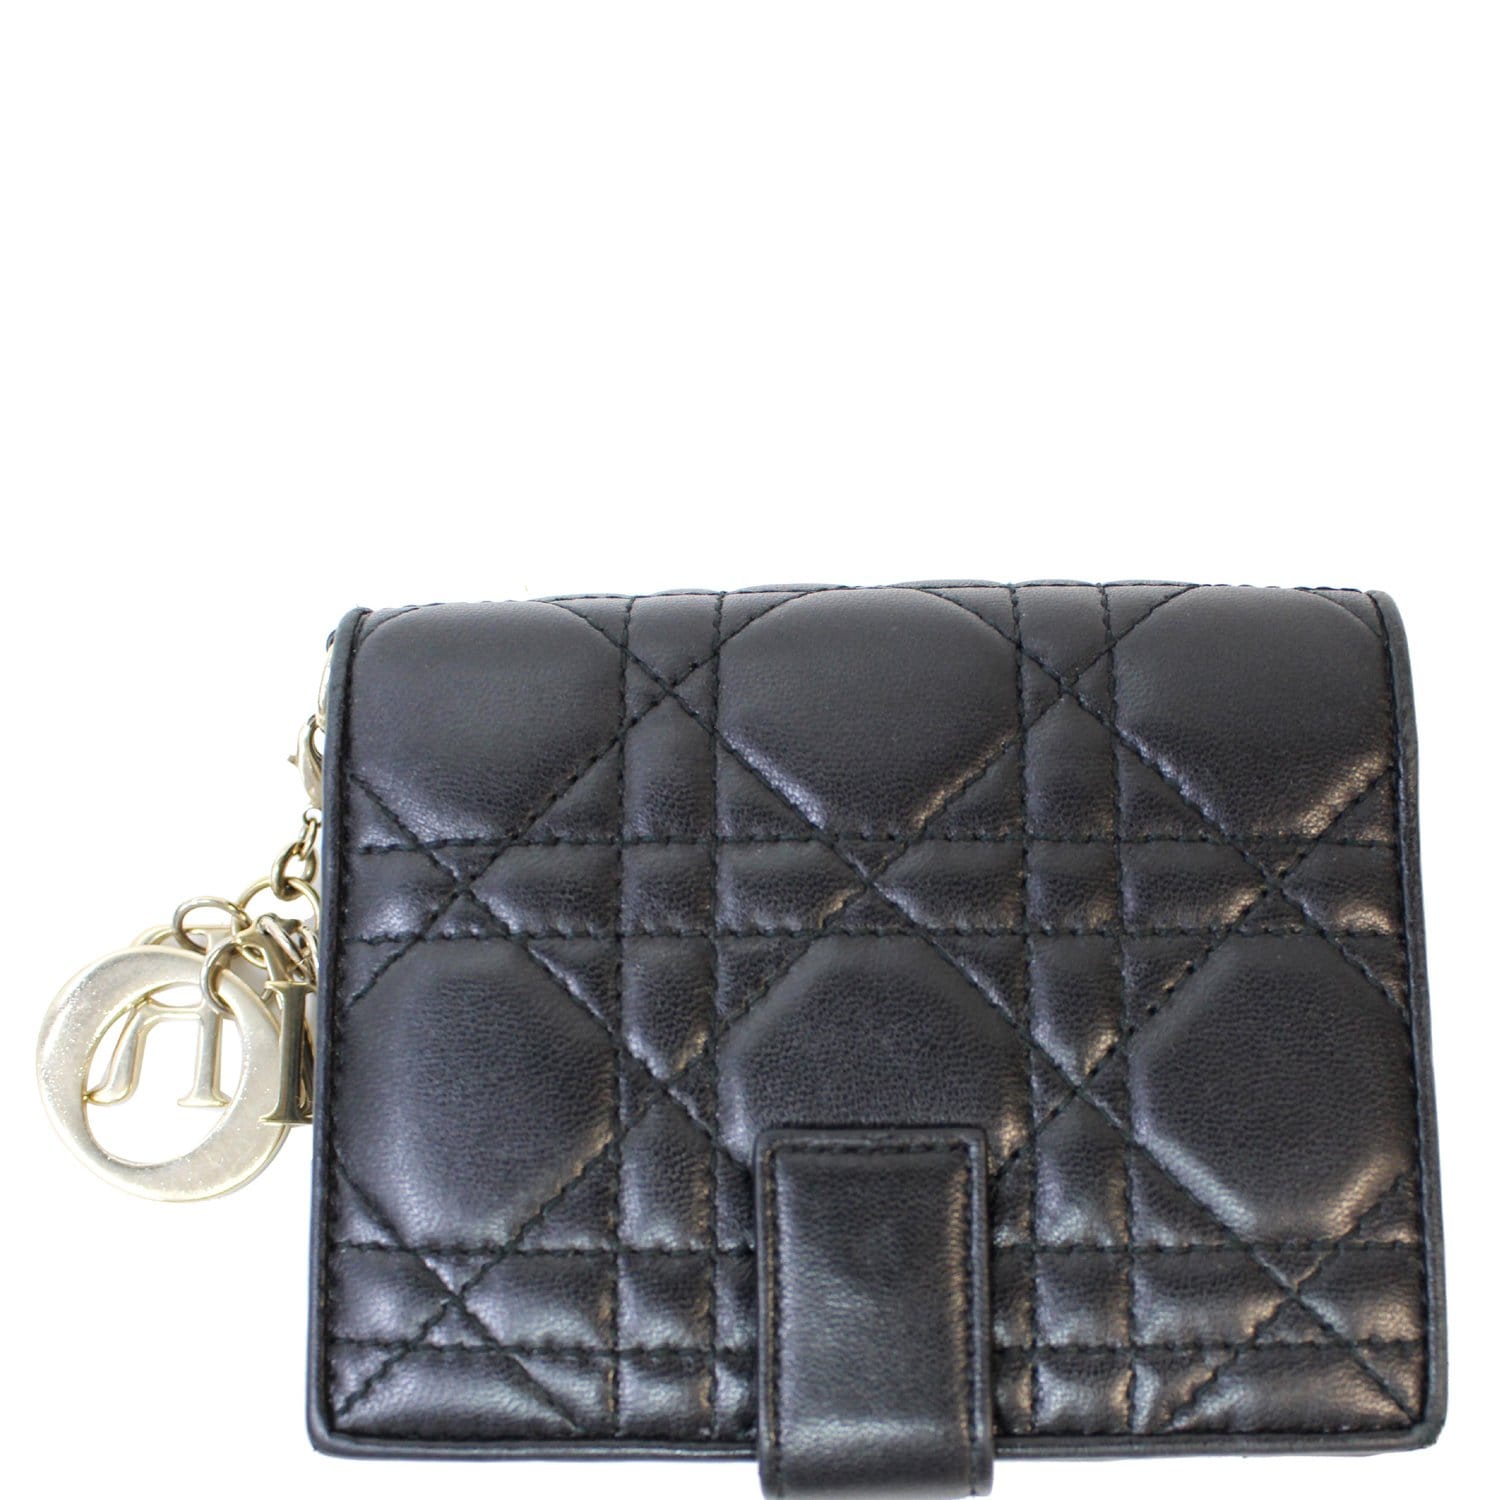 Lady Dior Mini Wallet